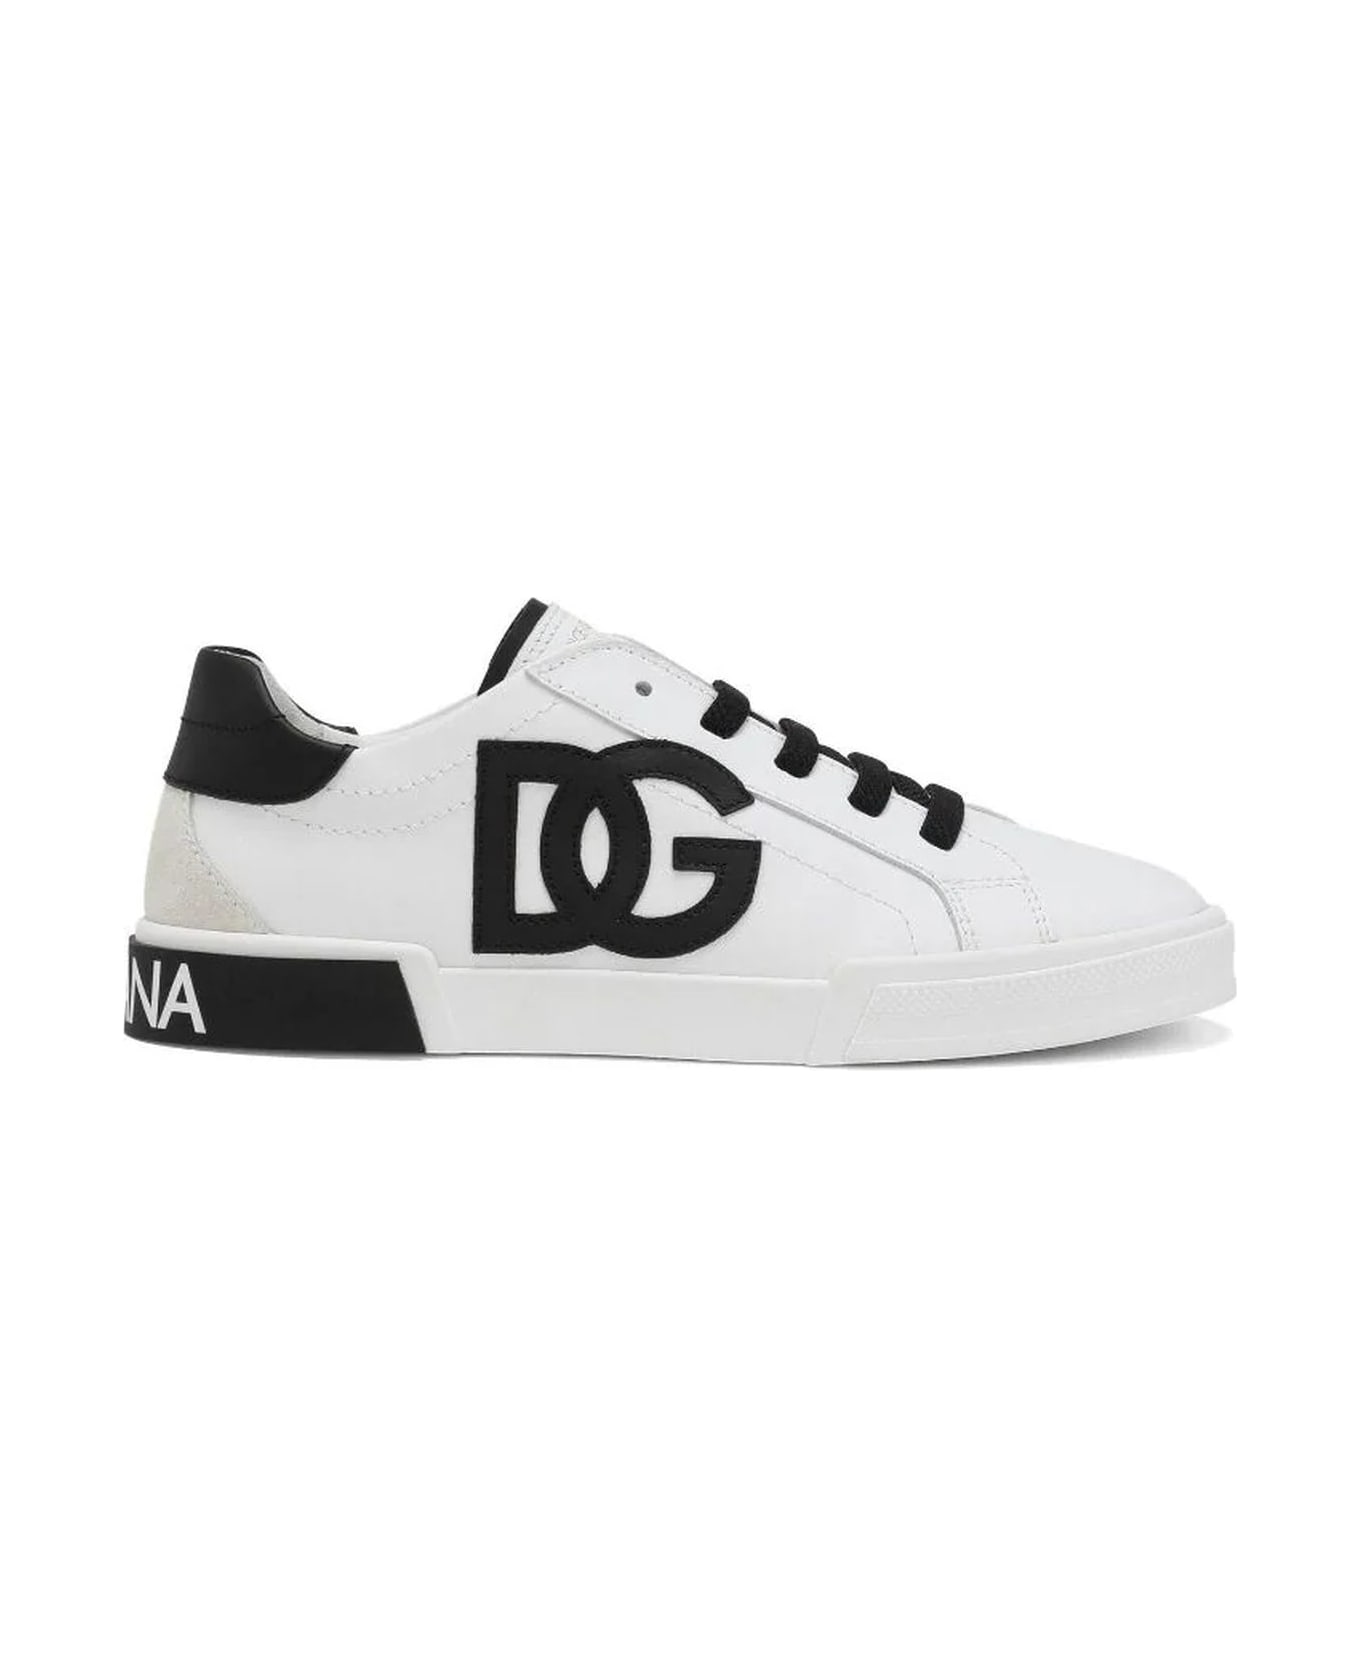 Dolce & Gabbana White Calf Leather Sneakers - White